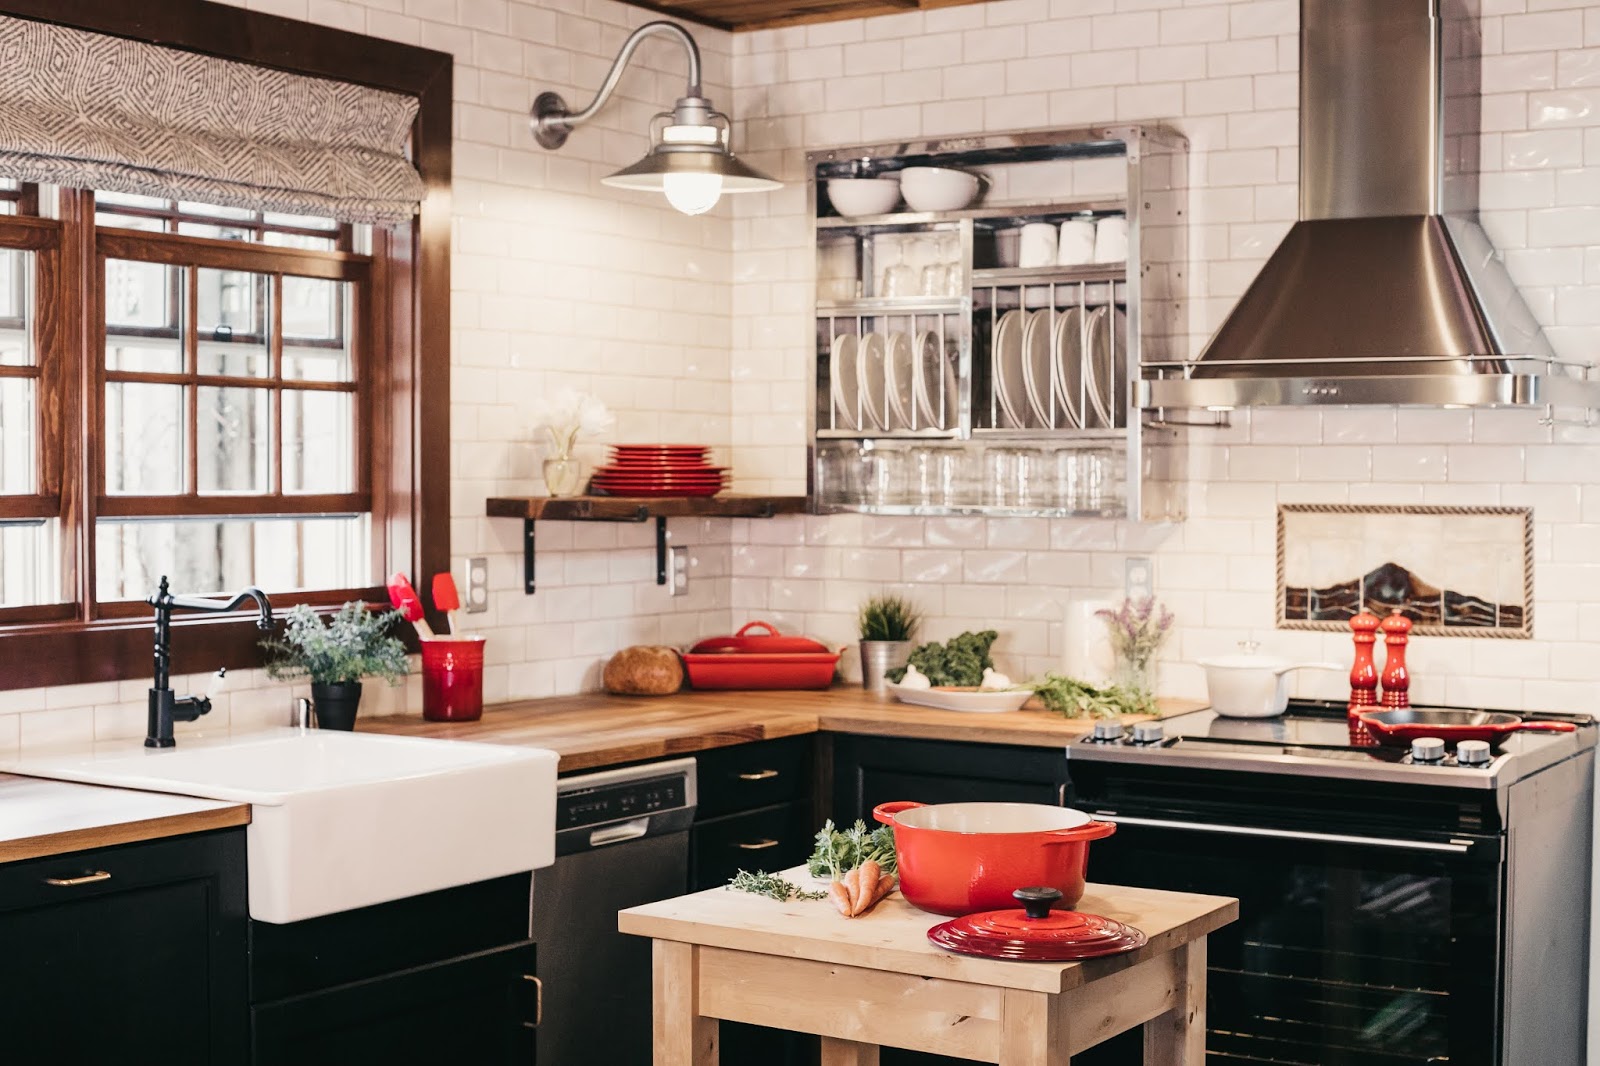 10 Model Desain Dapur Minimalis Modern Dengan Kitchen Set Terbaru 2021 NDekorRumah